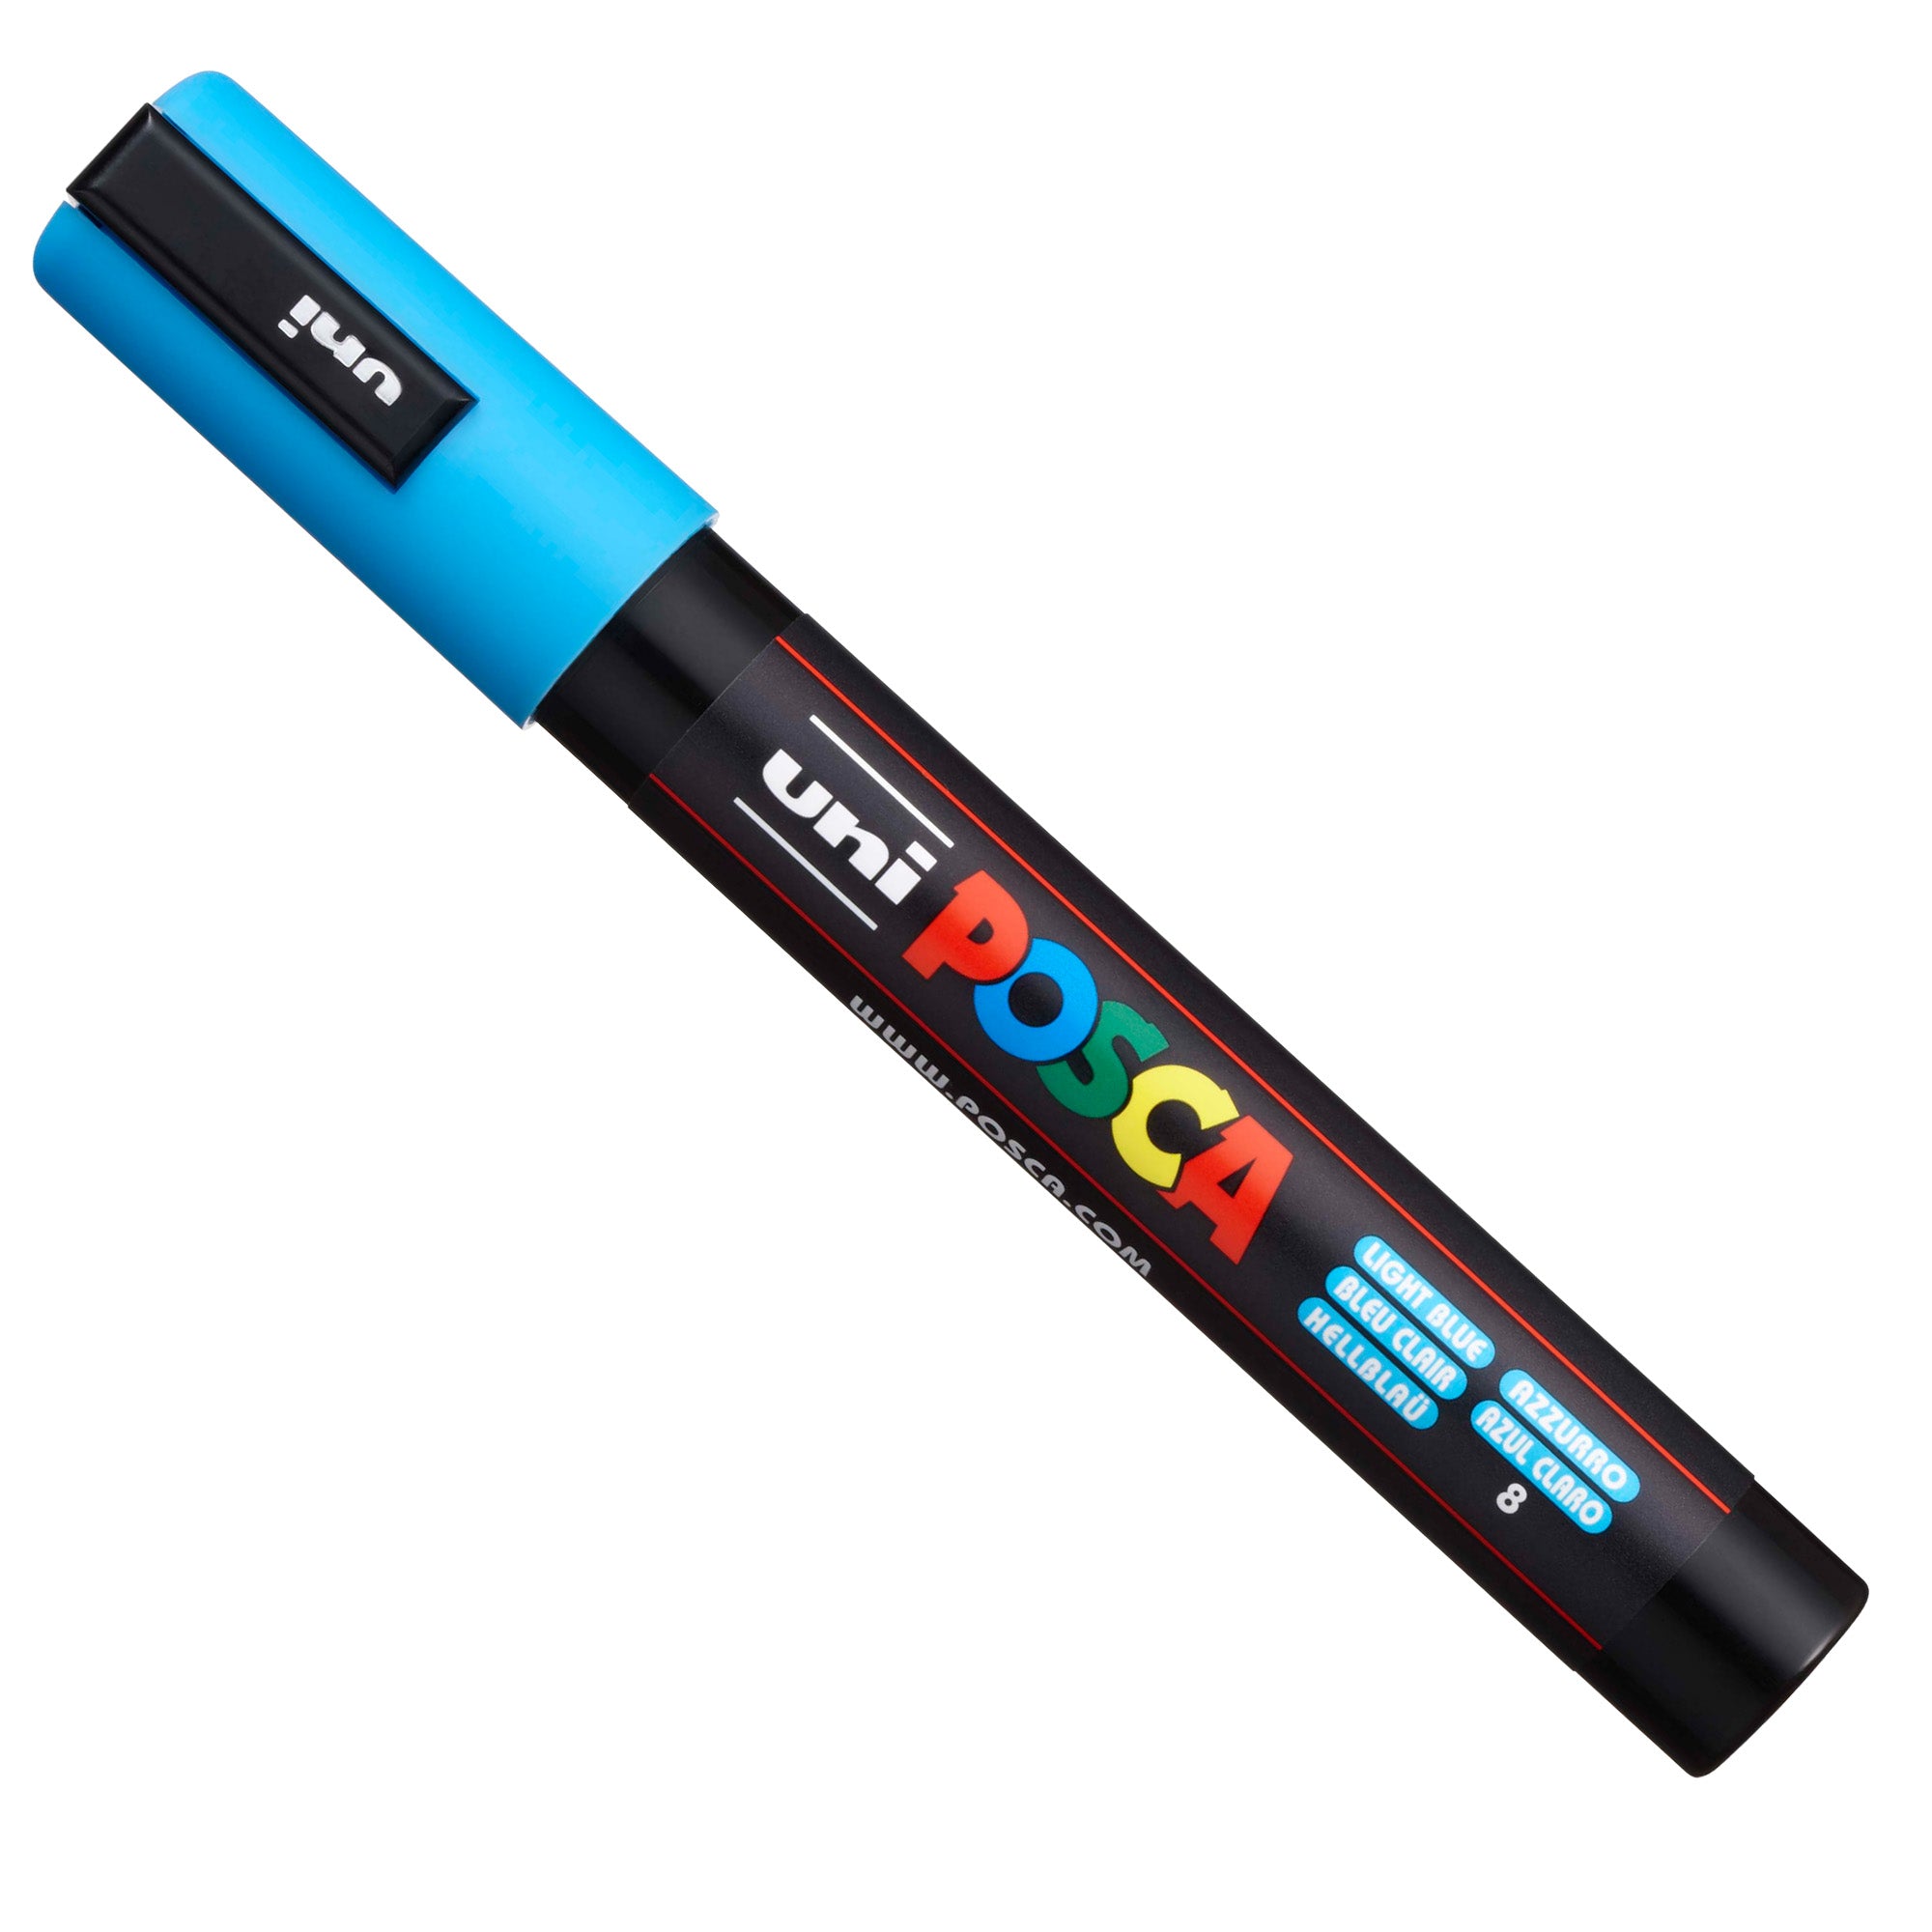 uni-mitsubishi-marcatore-uni-posca-pc5m-p-media-1-8-2-5mm-azzurro